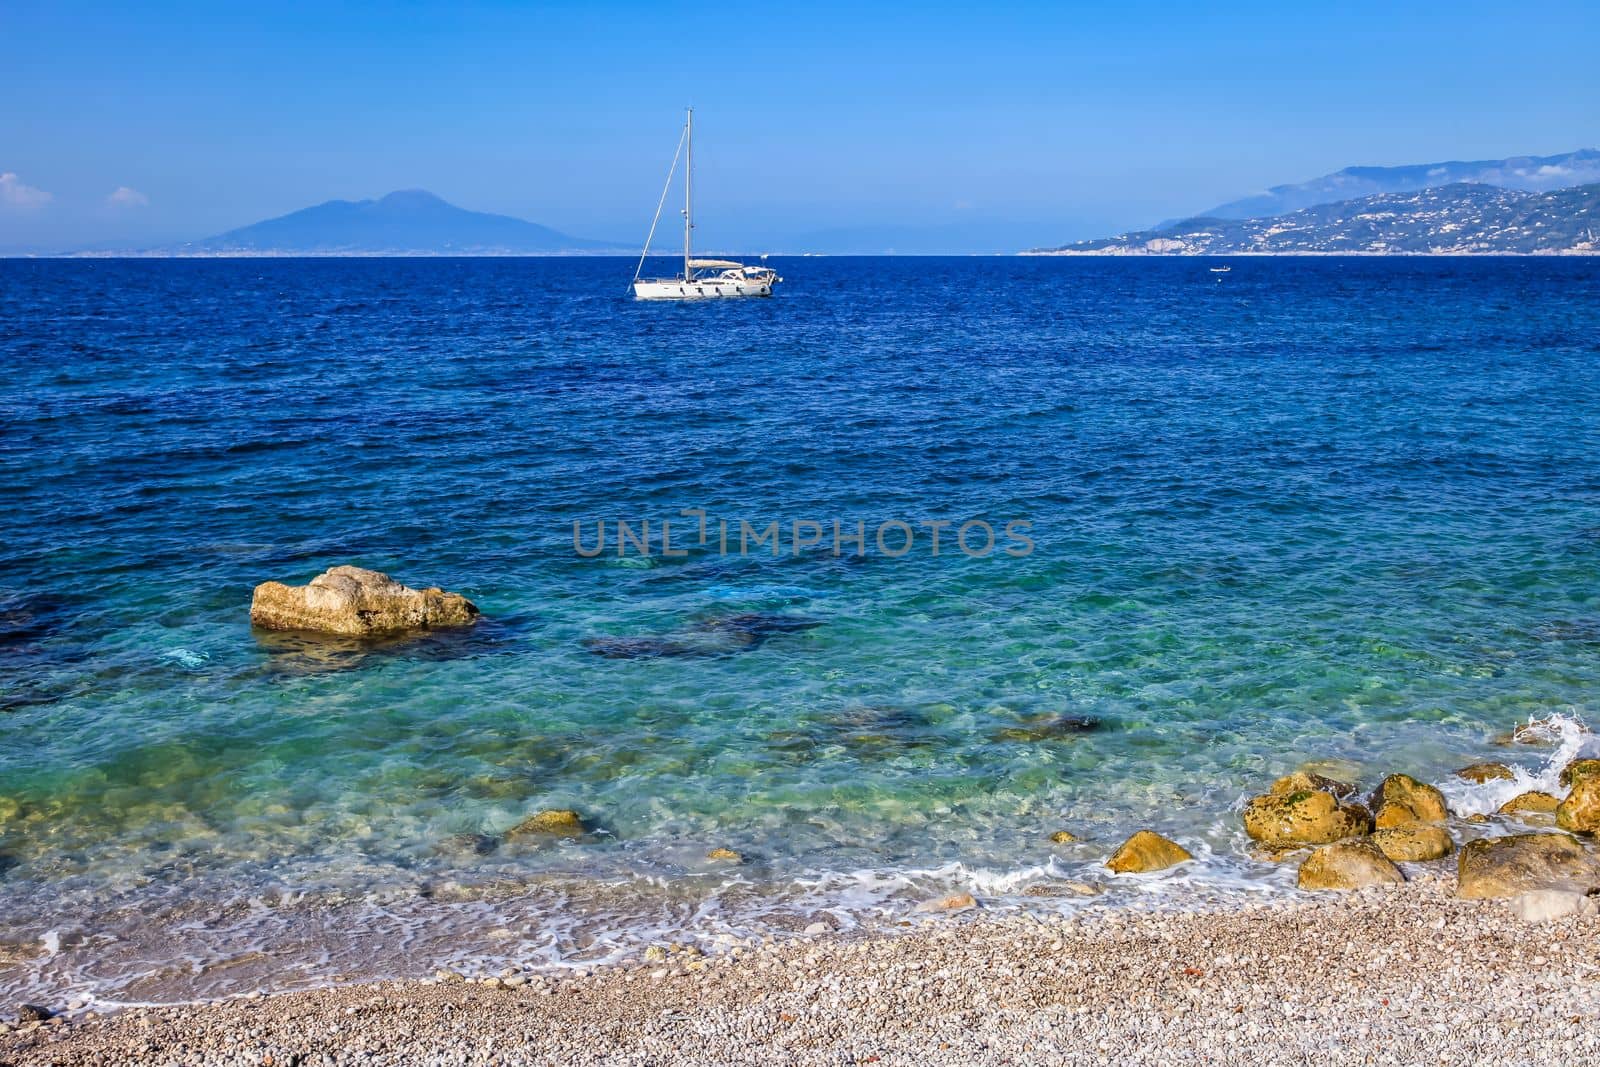 Capri island beach and coastline with boats and sailboats, amalfi coast, Italy